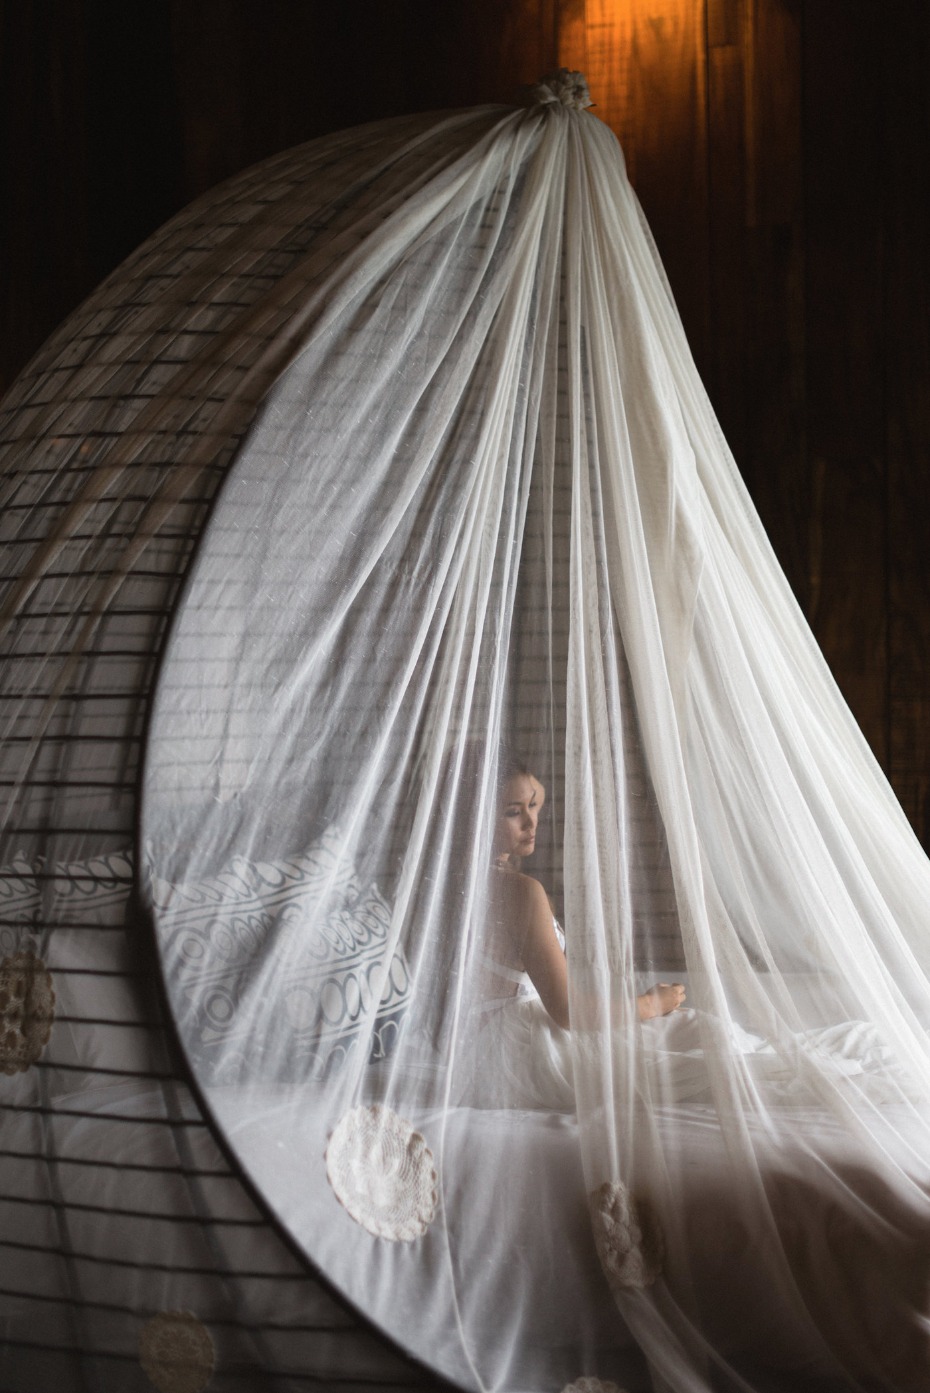 mosquito netting bed